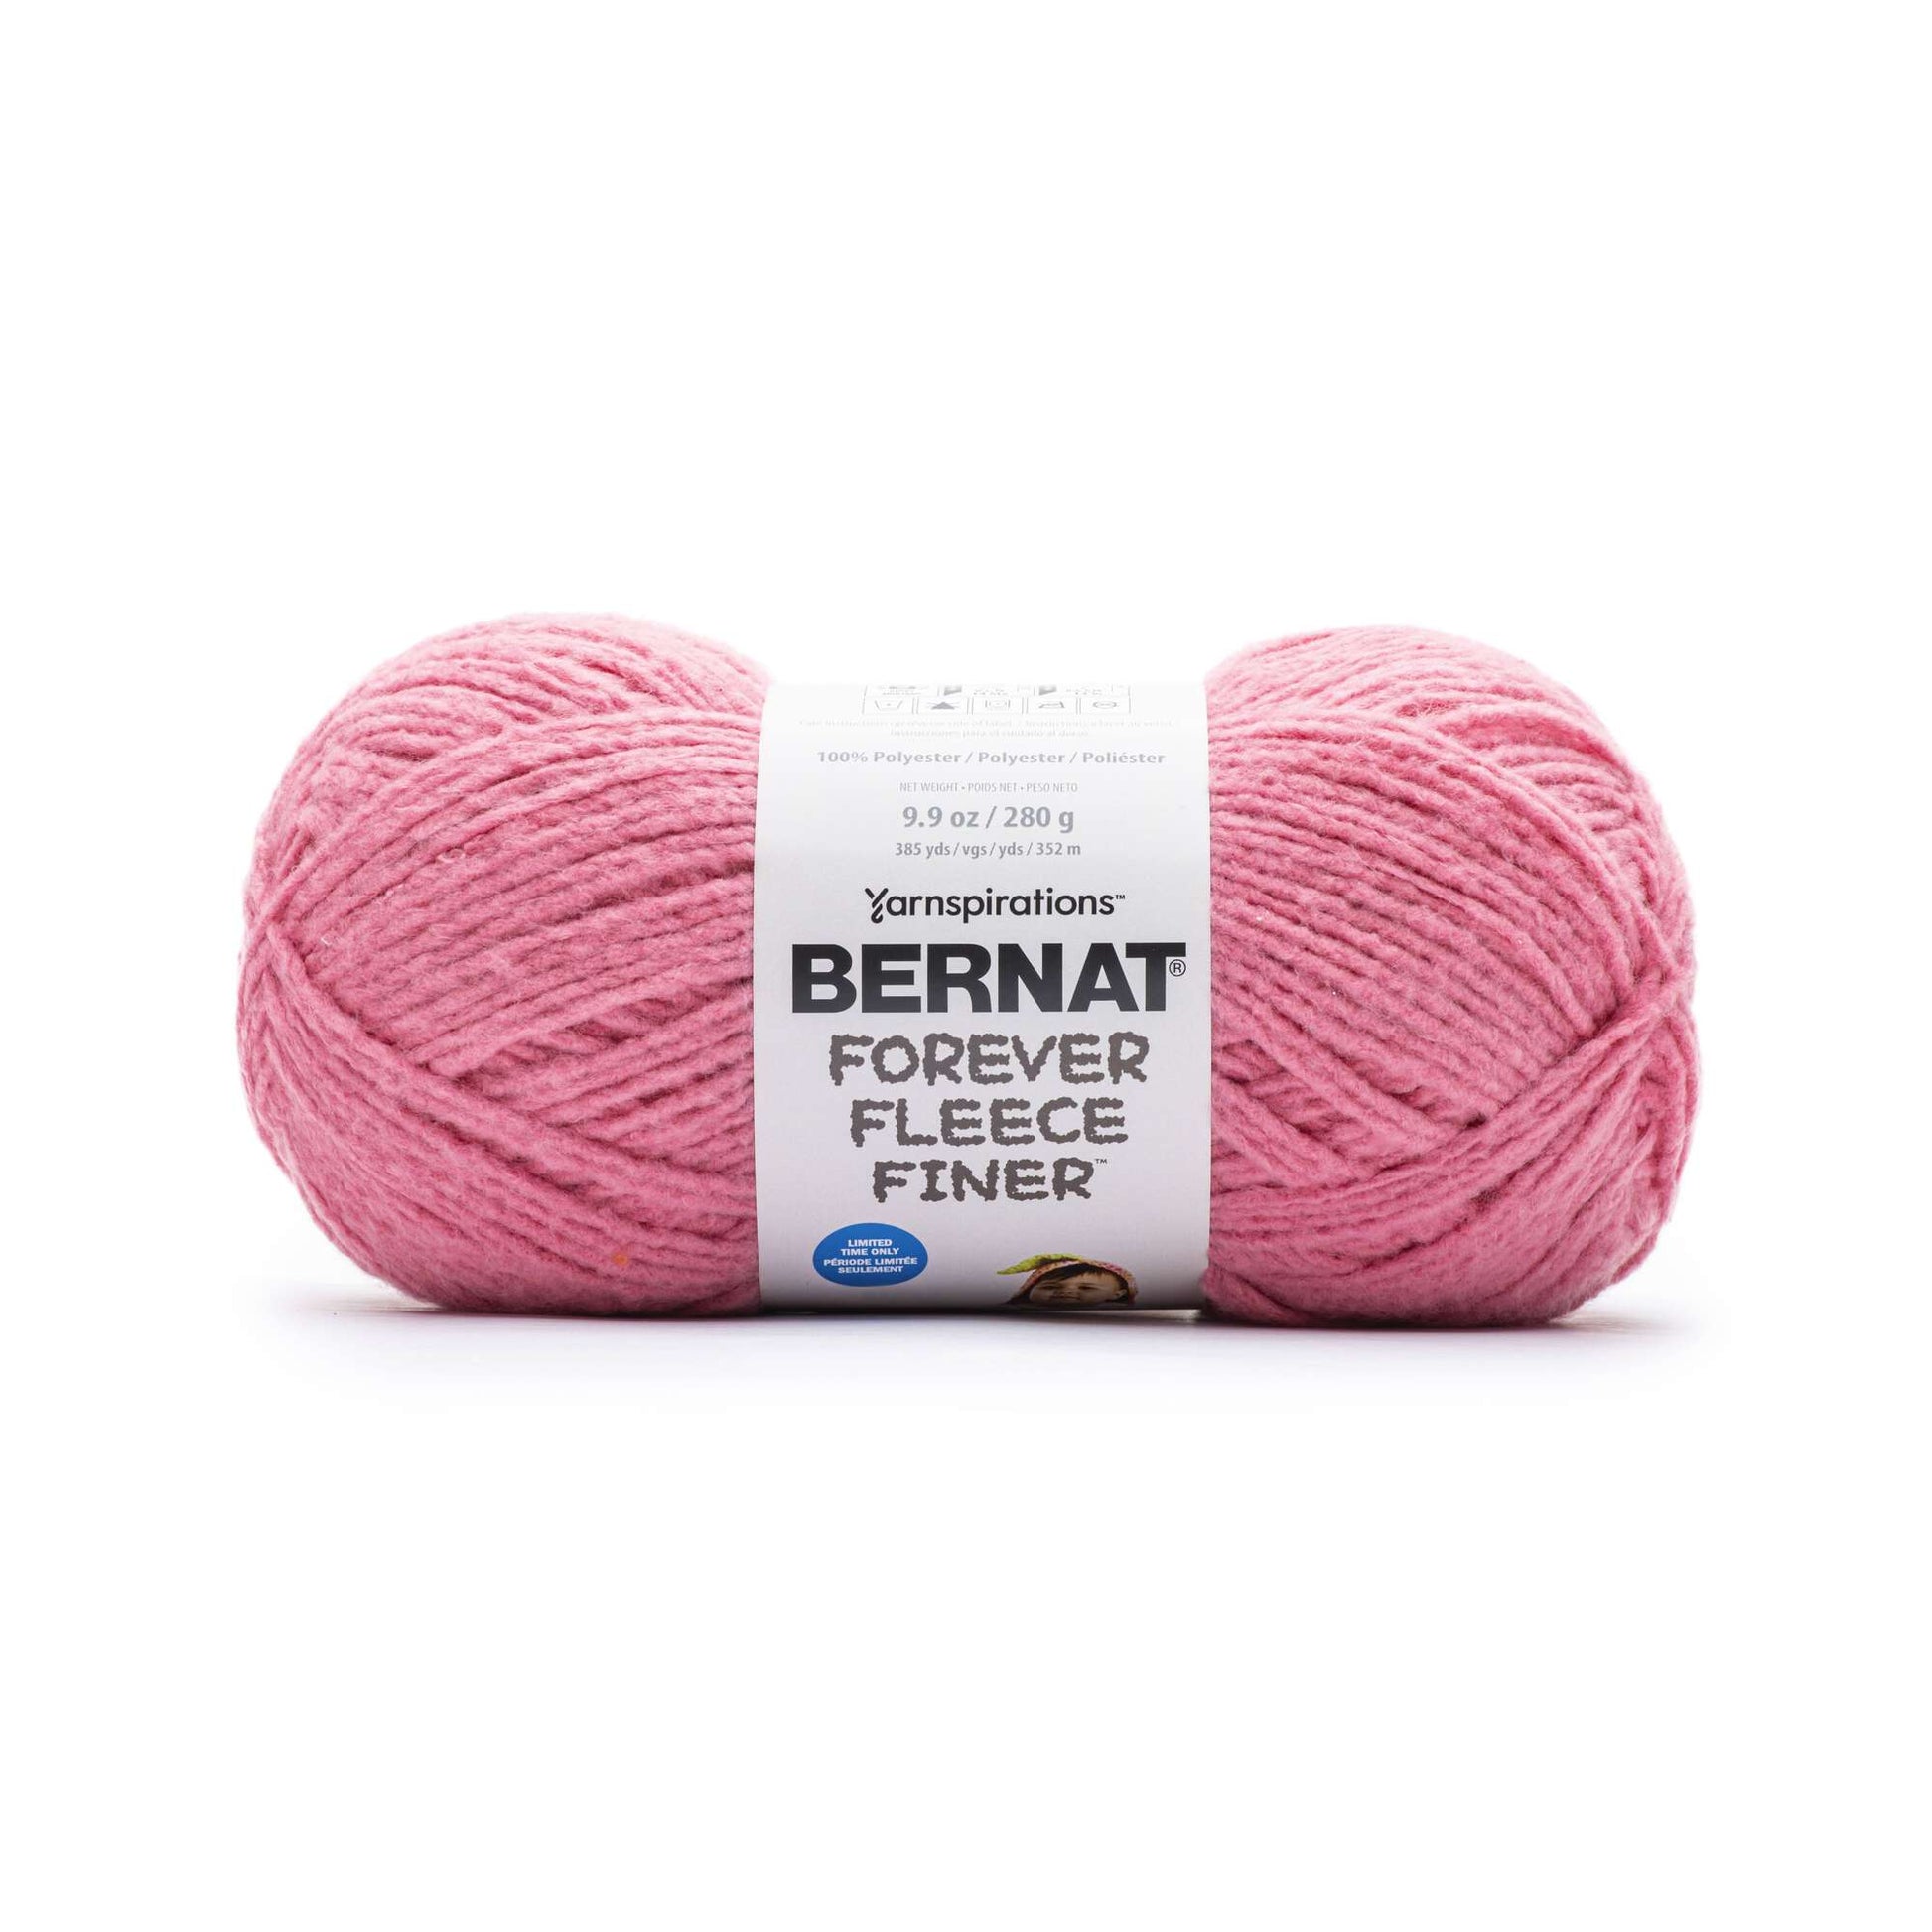 Bernat Forever Fleece Finer Yarn - Discontinued Shades Petunia